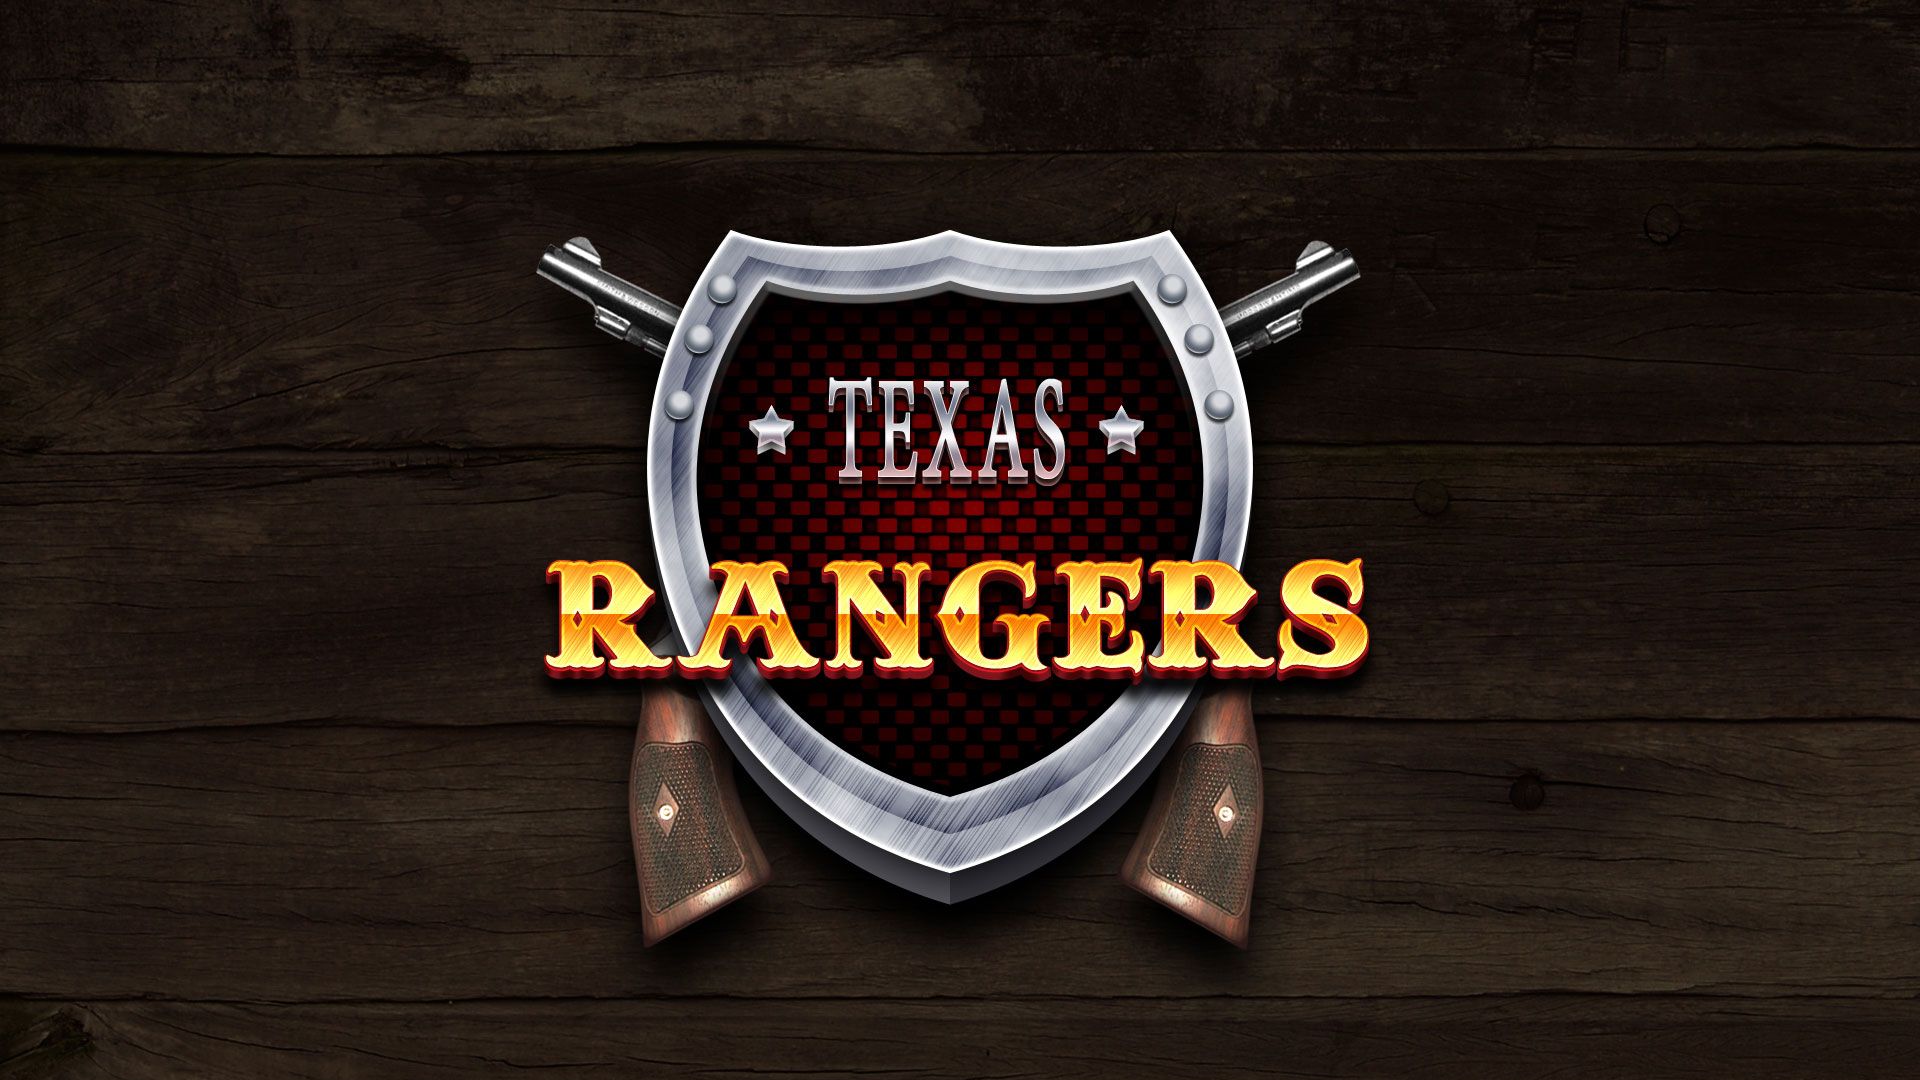 Wallpapers Texas Rangers Logo 1920 X 1080 187 Kb Jpeg HD Wallpapers